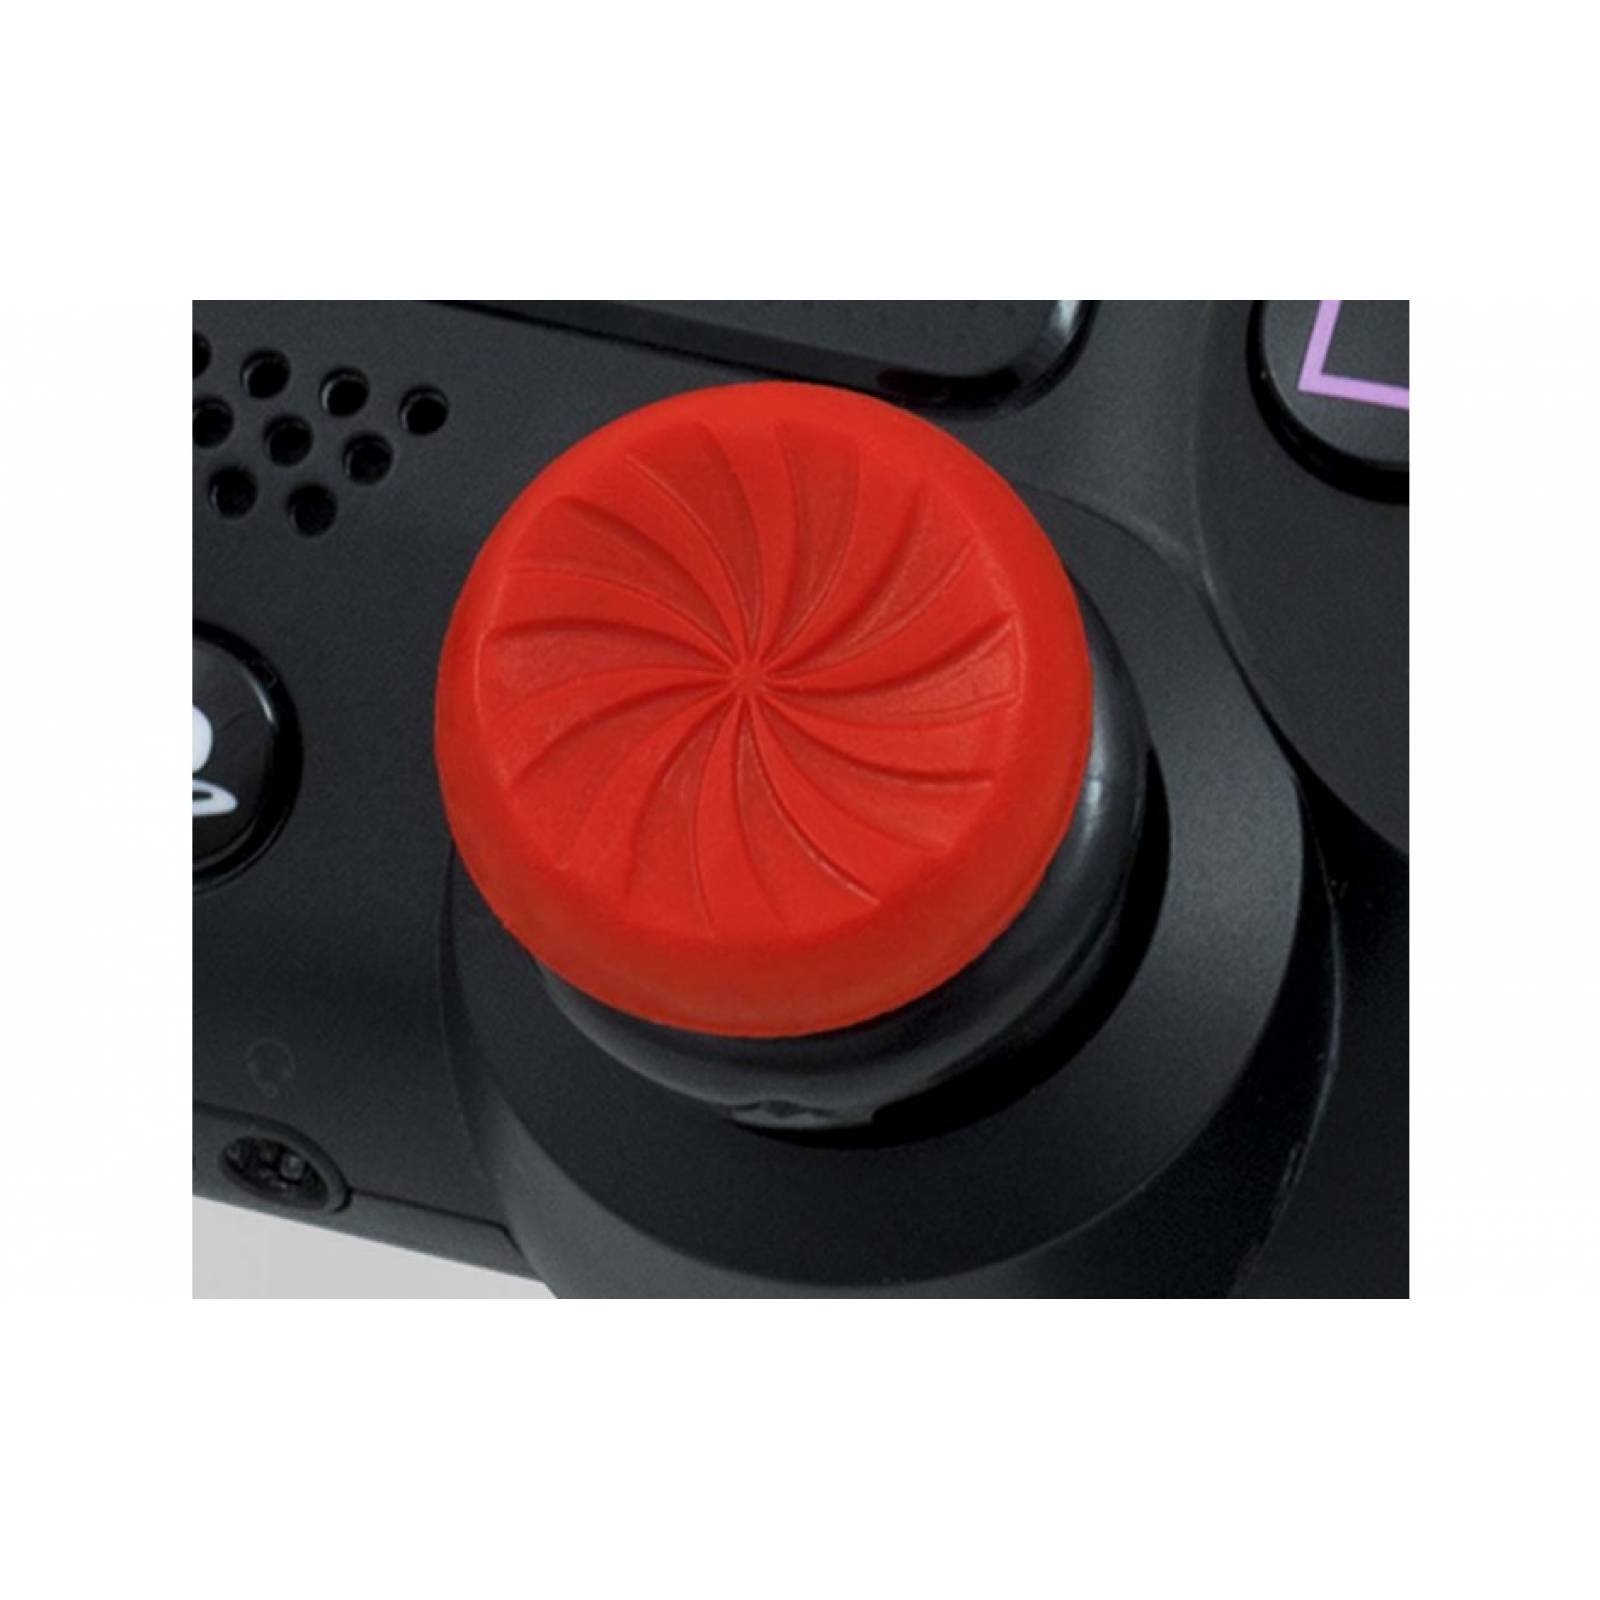 Control Mando Play Station 4 Mod FPS Inferno Accesorio PS4